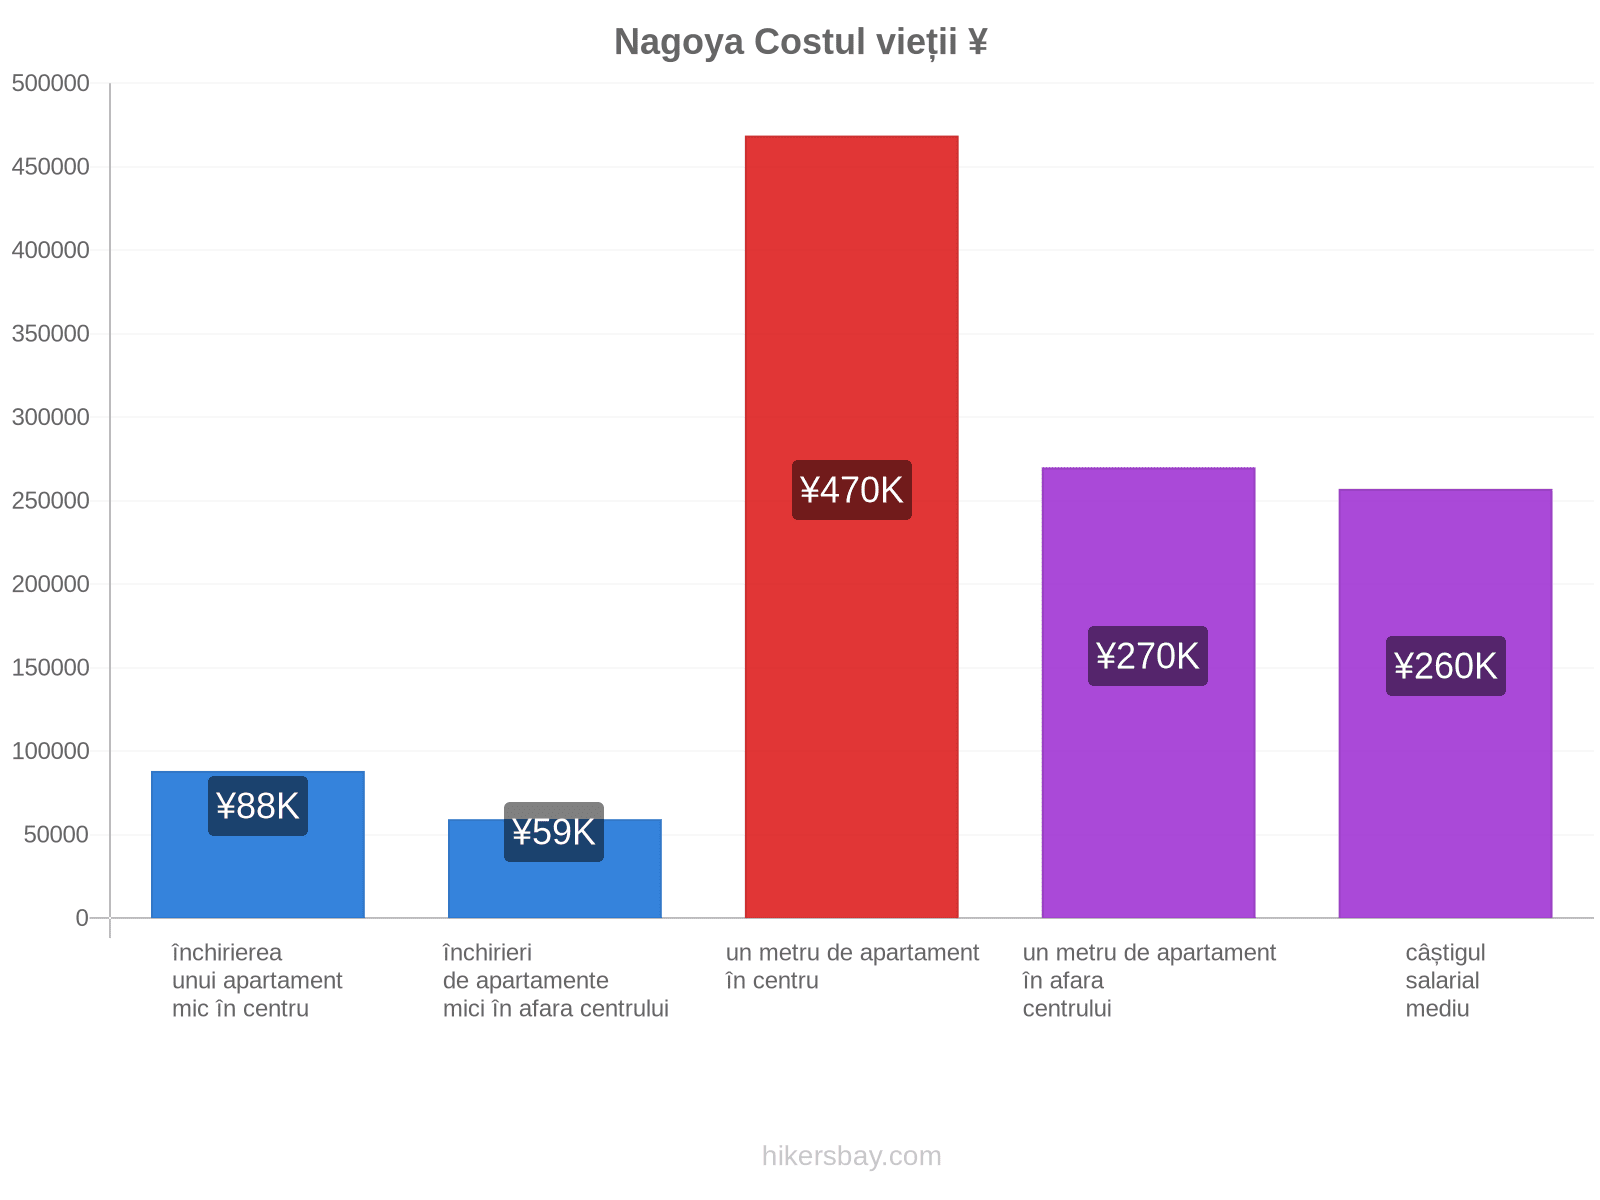 Nagoya costul vieții hikersbay.com